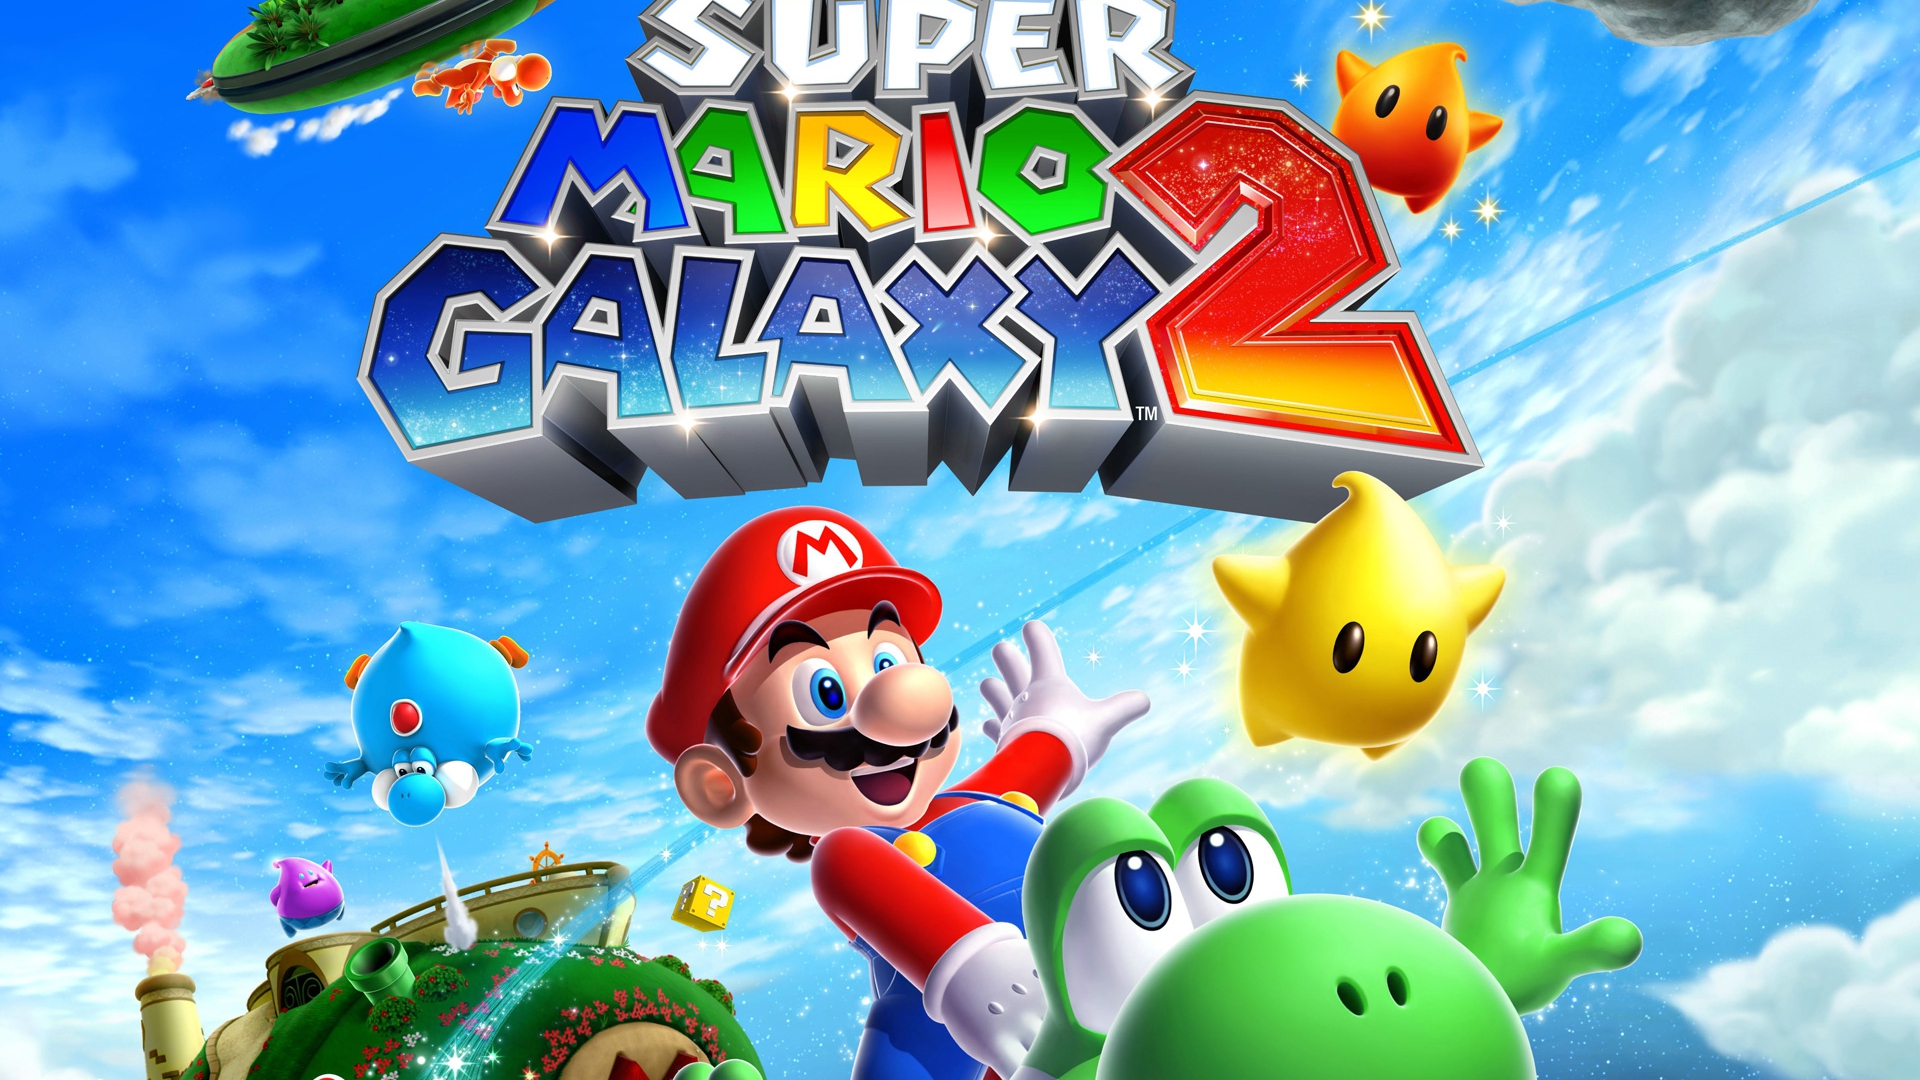 Super Mario Galaxy Wallpaper 4K (1920x1080 px)